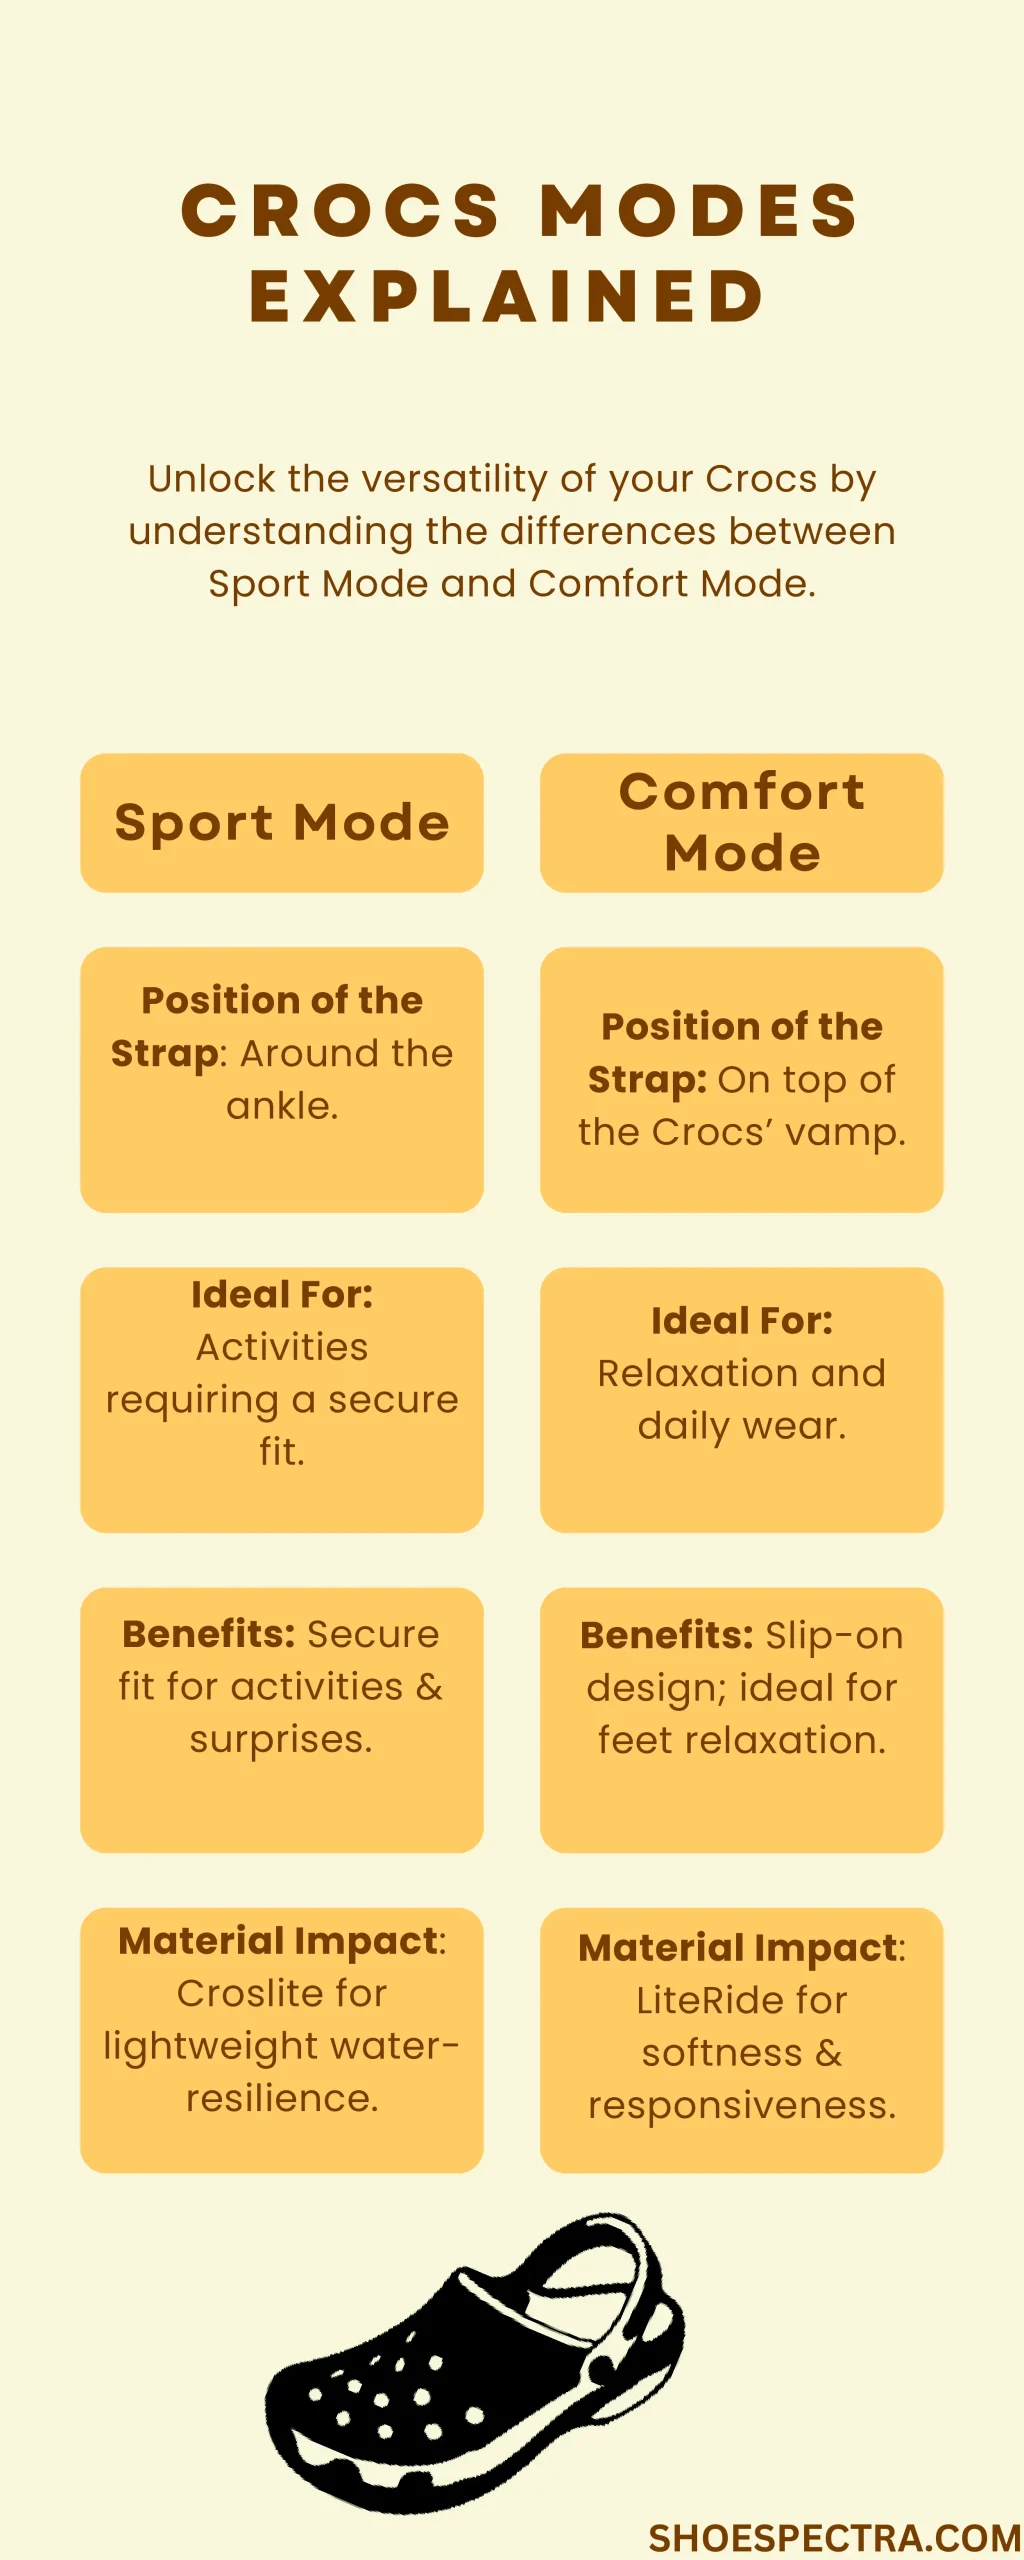 Comparative Infographic of Crocs' Sport Mode vs. Comfort Mode"

